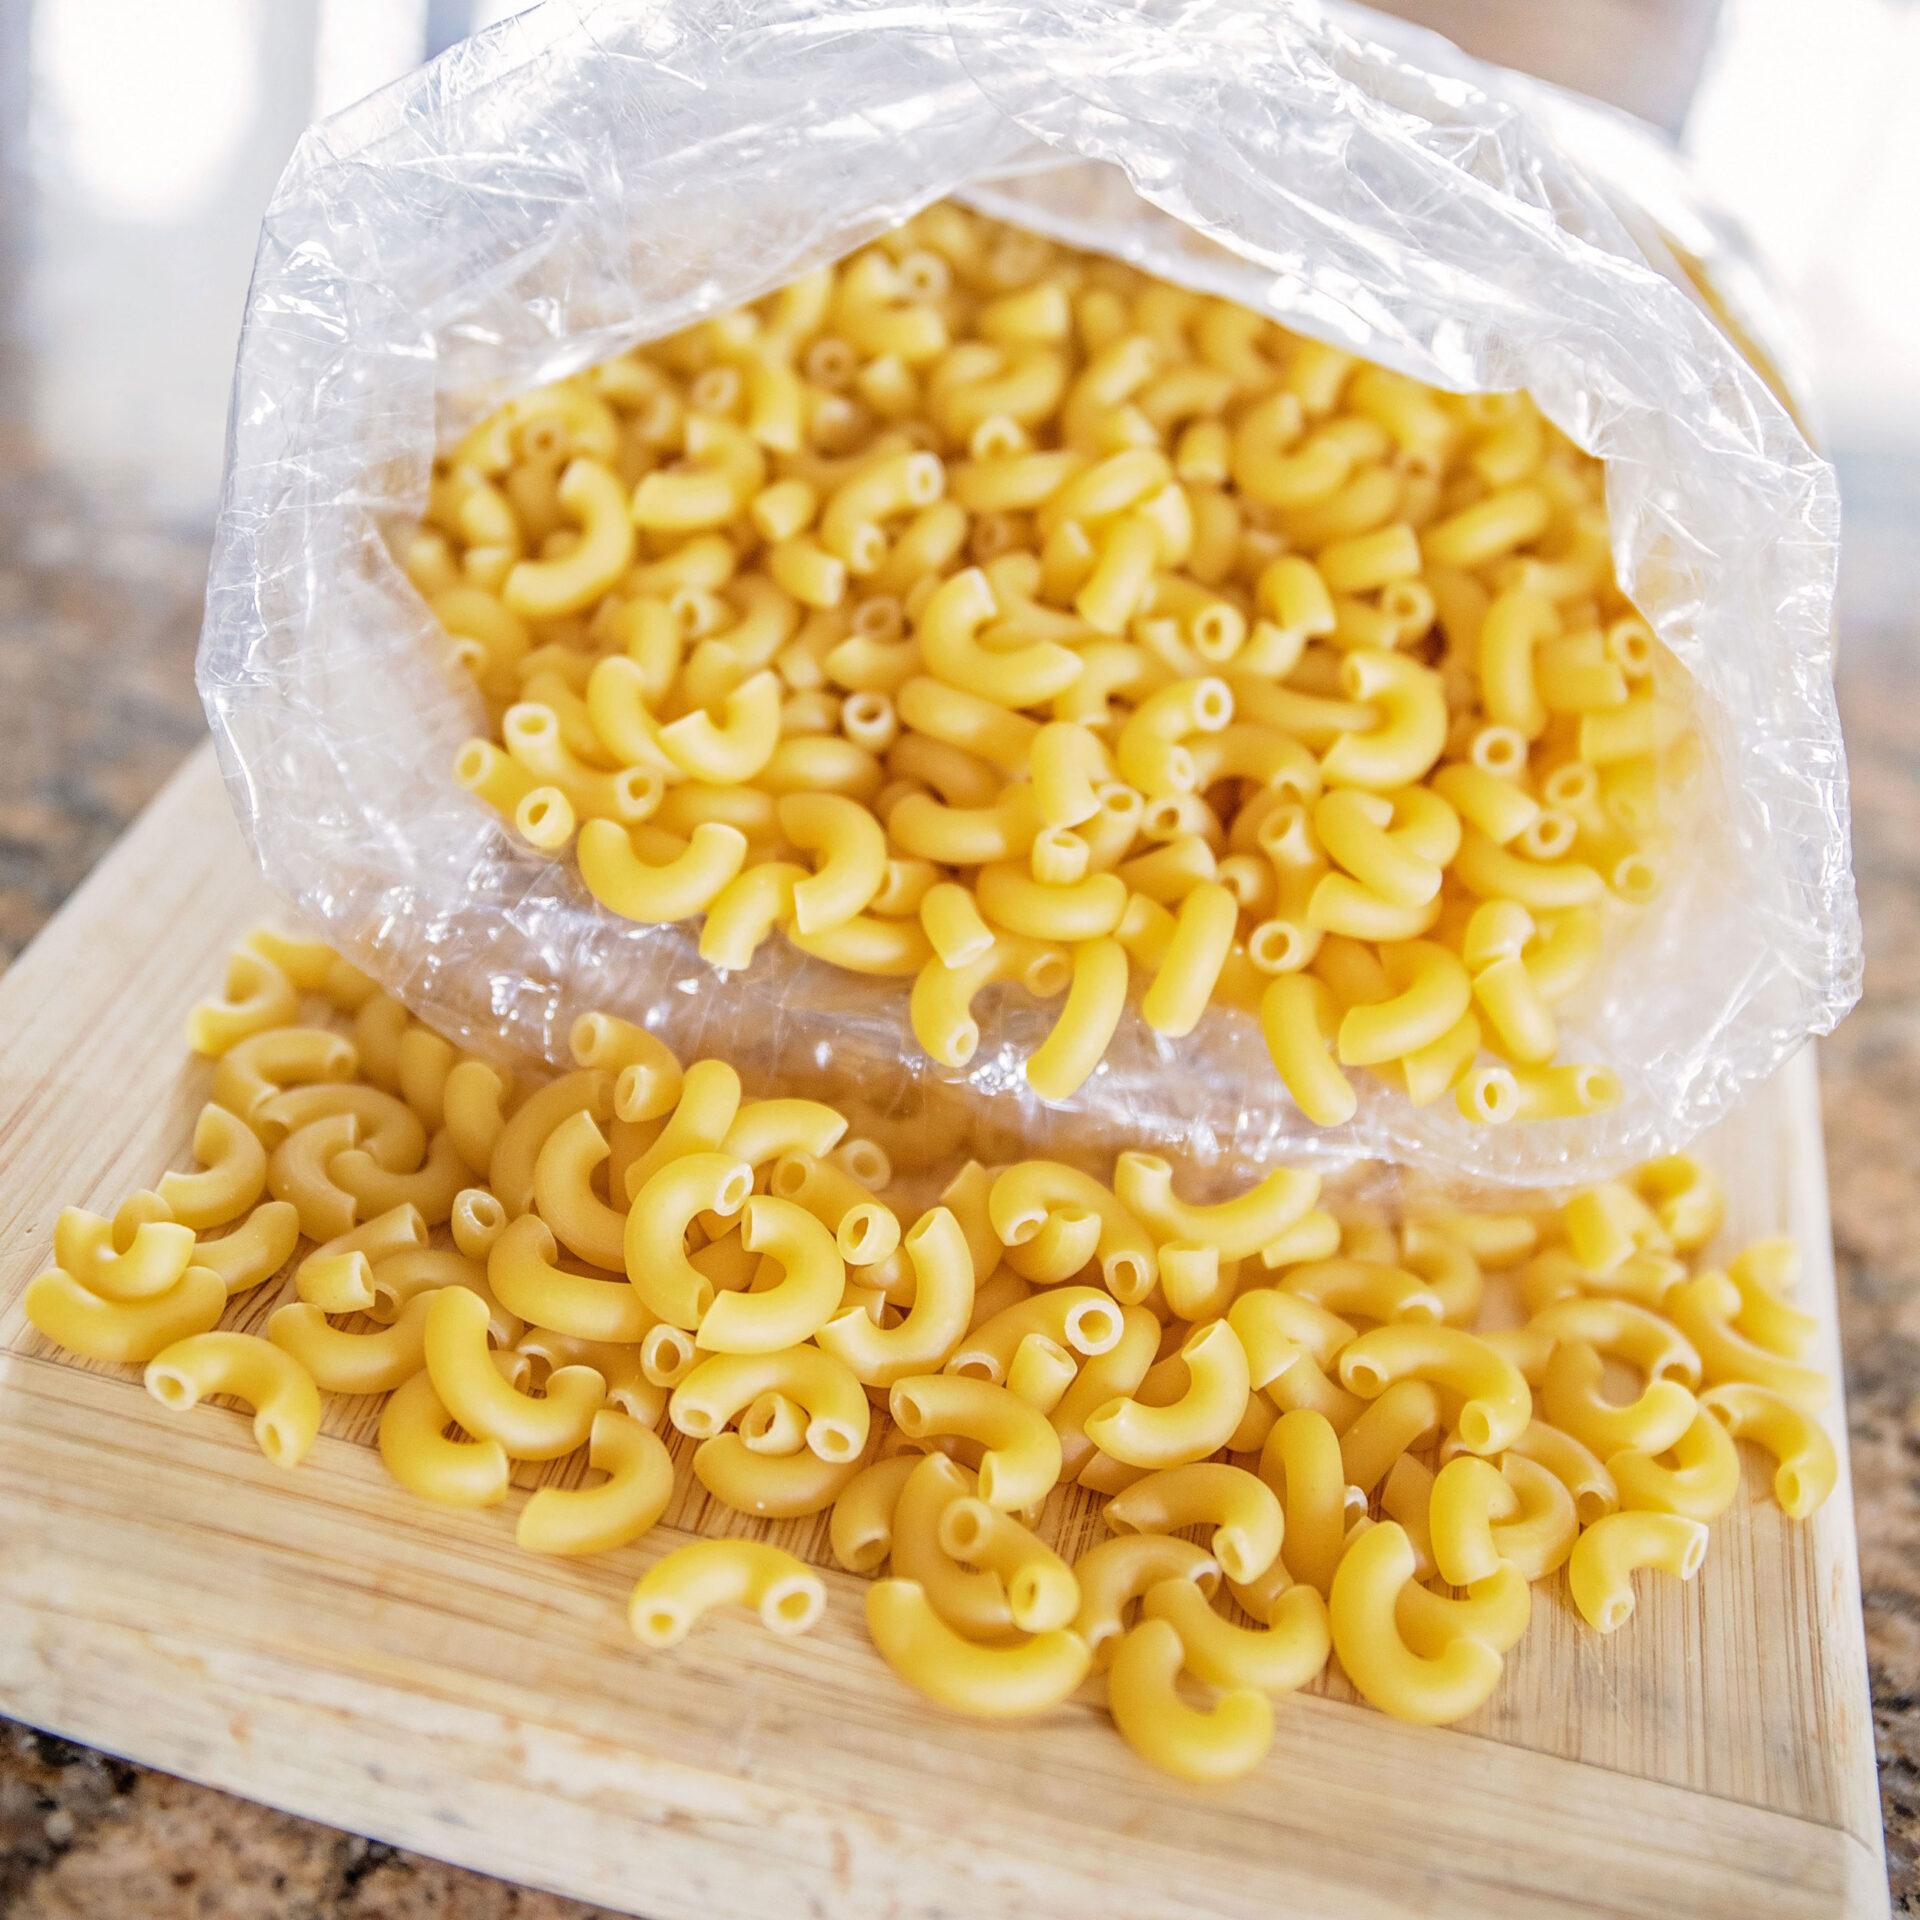 elbow macaroni recipes without cheese